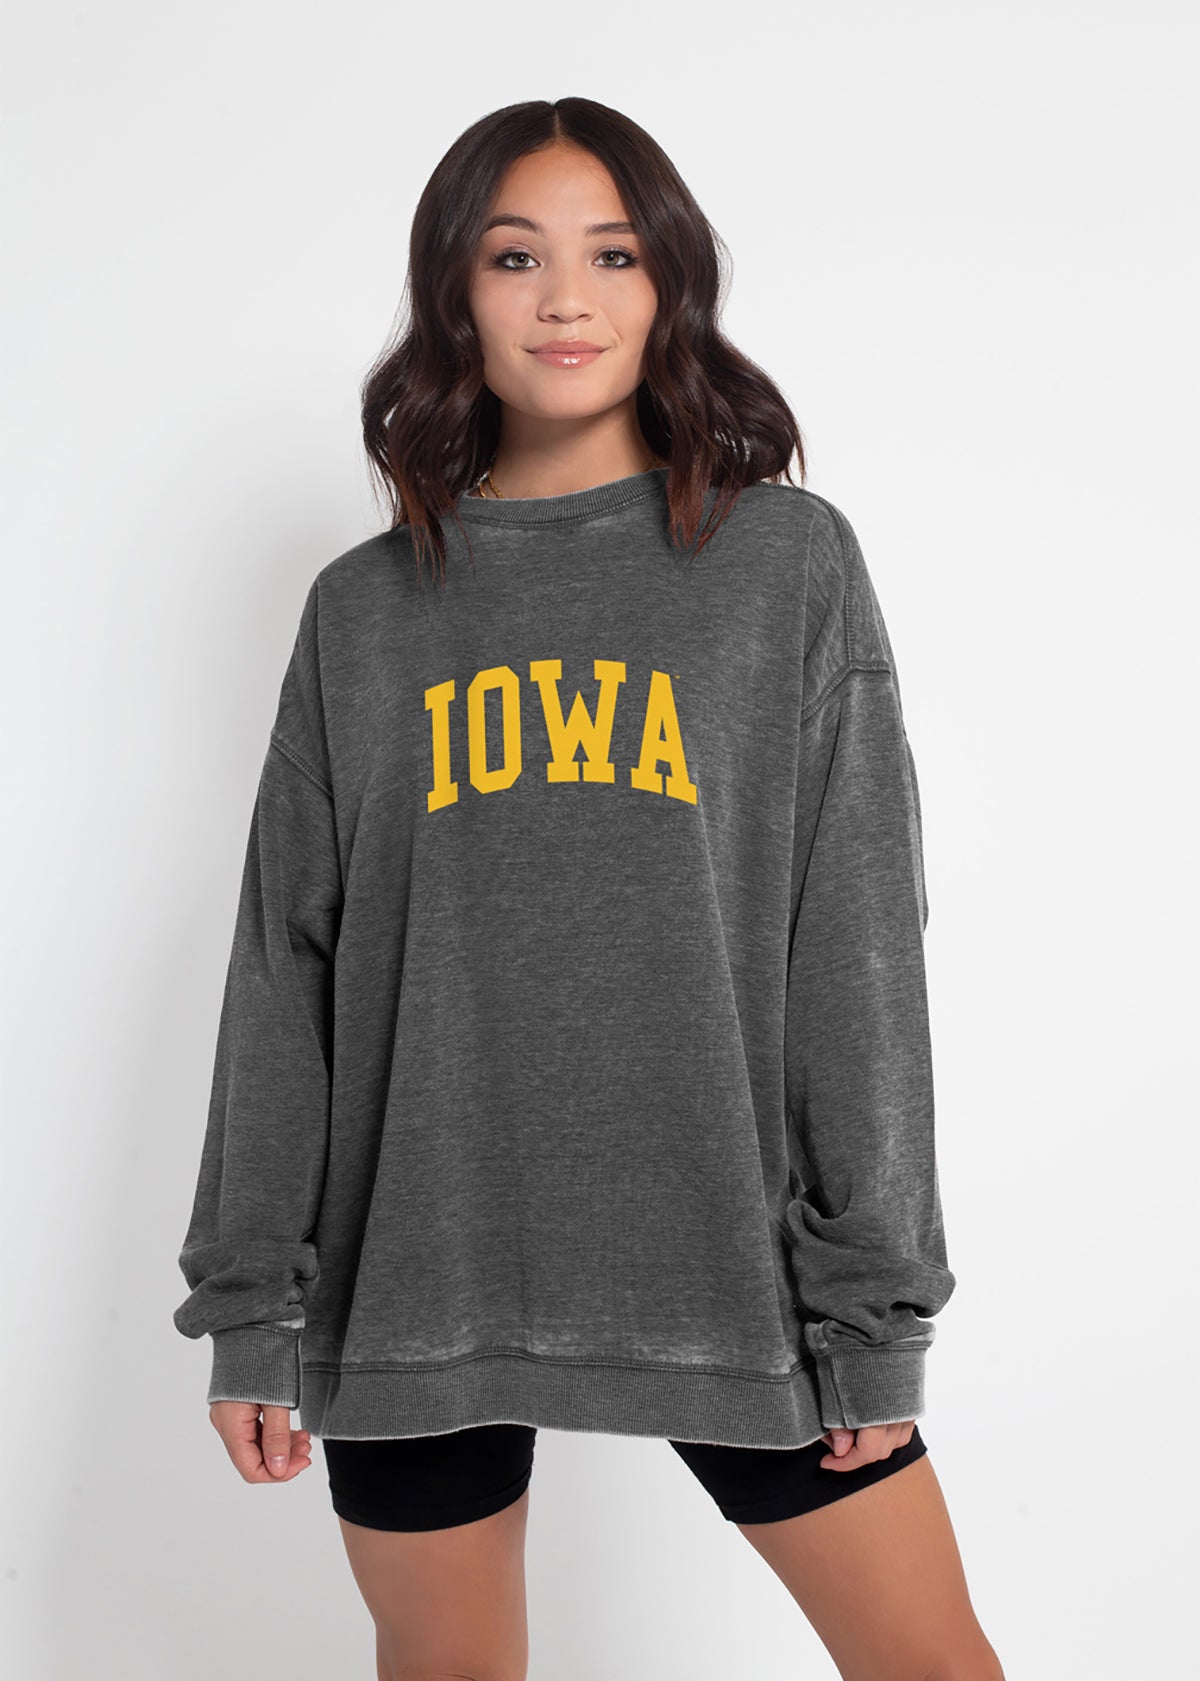 Campus Crew Sweatshirt Iowa Hawkeyes in Charcoal